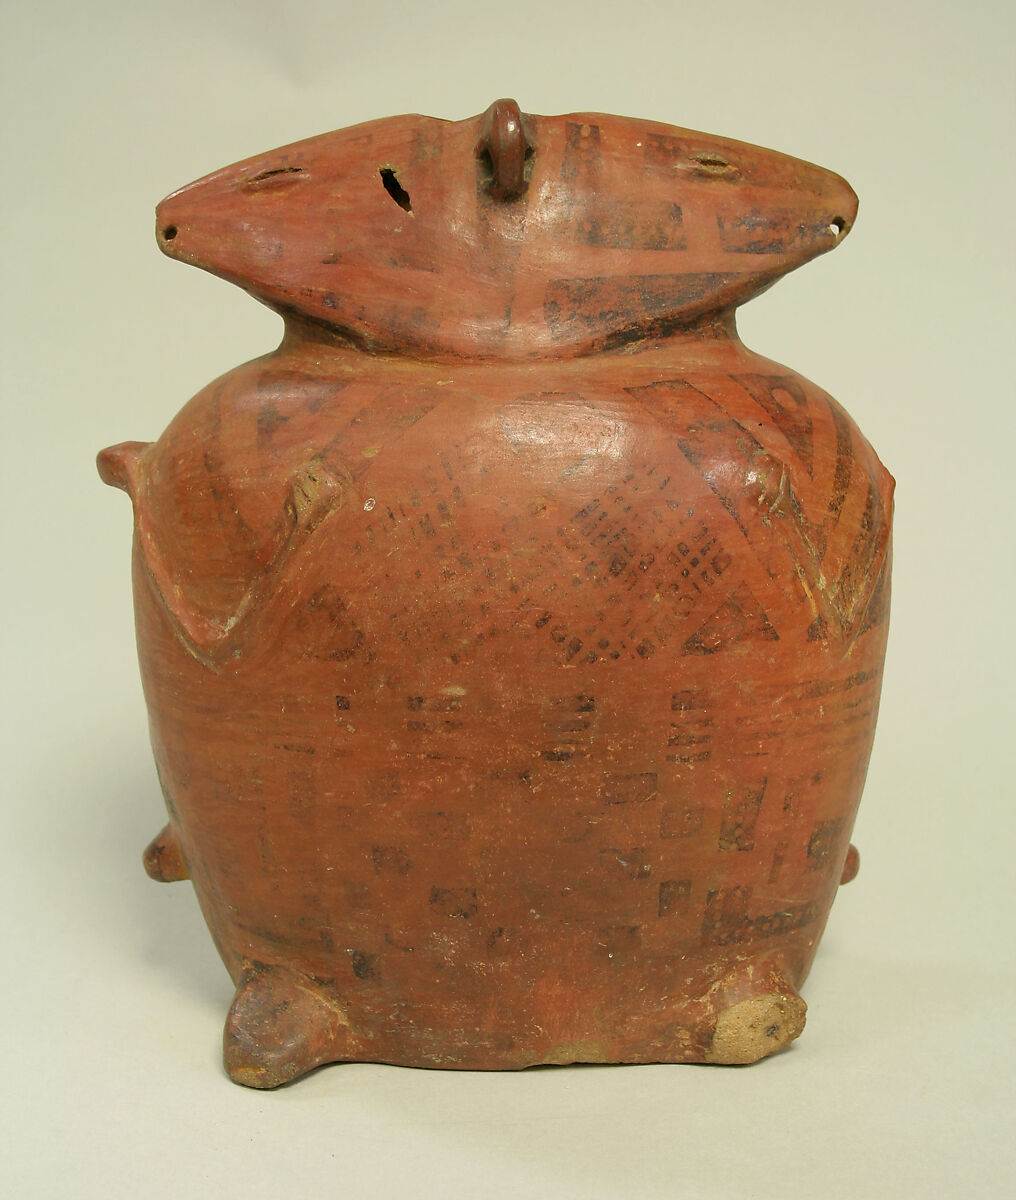 Figure Vessel, Ceramic
Contains ancient peanuts (no shell), Quimbaya 